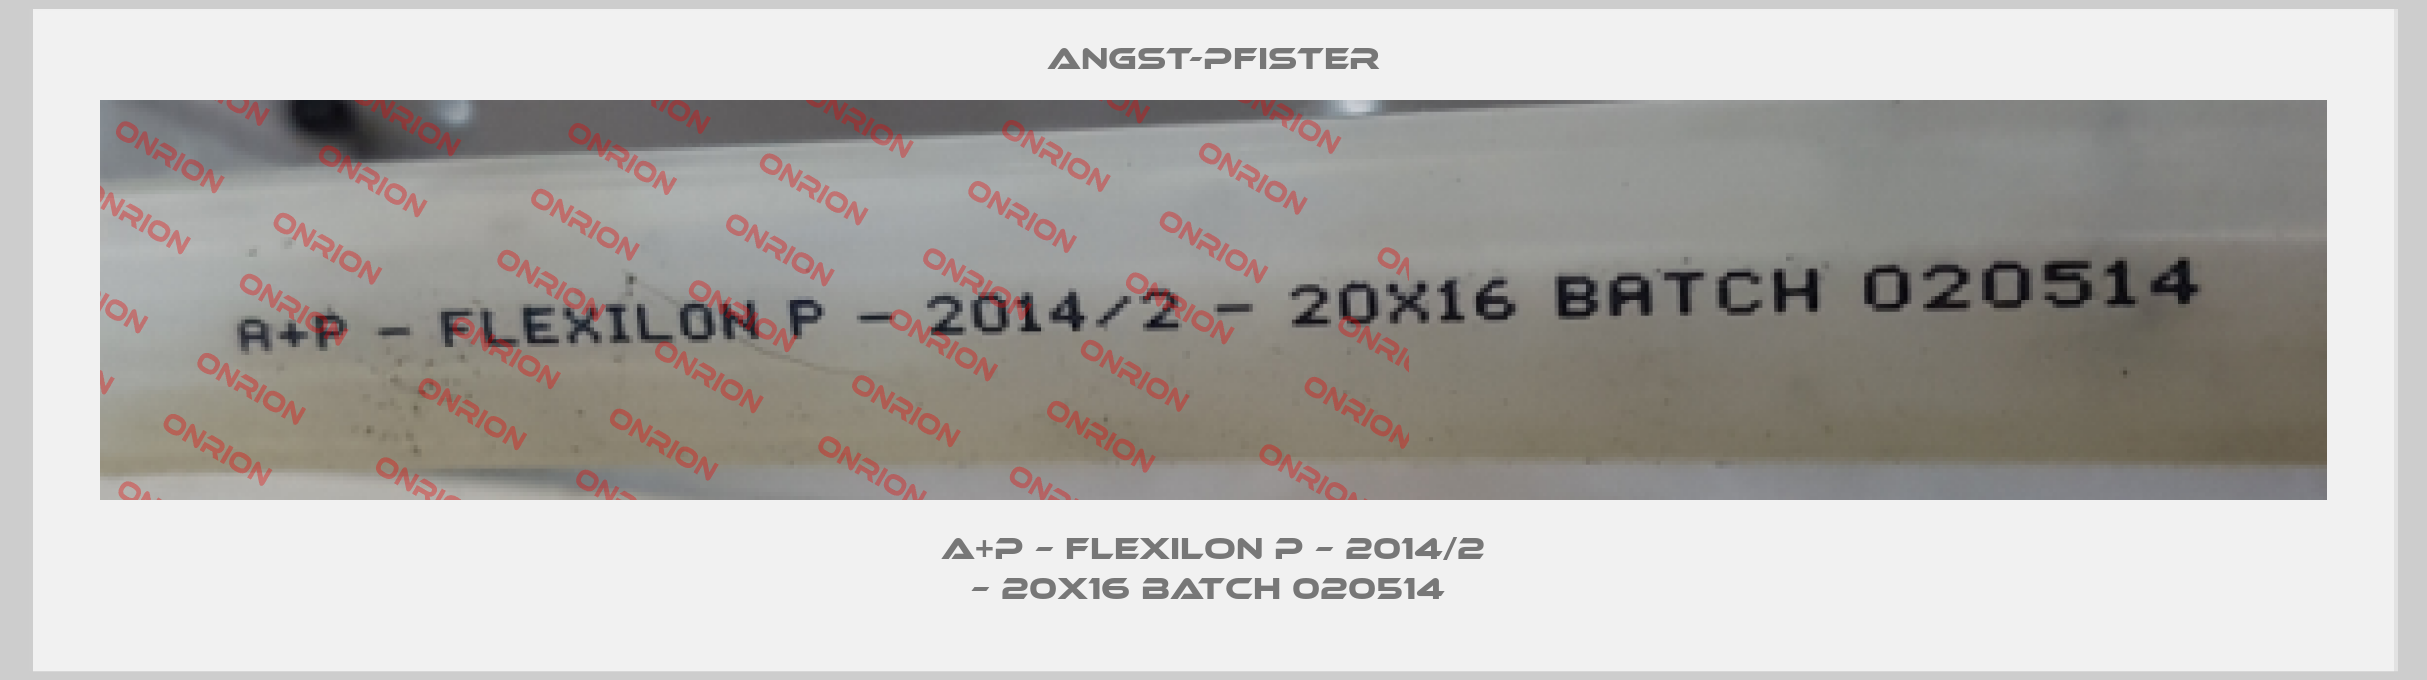 A+P – FLEXILON P – 2014/2 – 20X16 BATCH 020514 -big